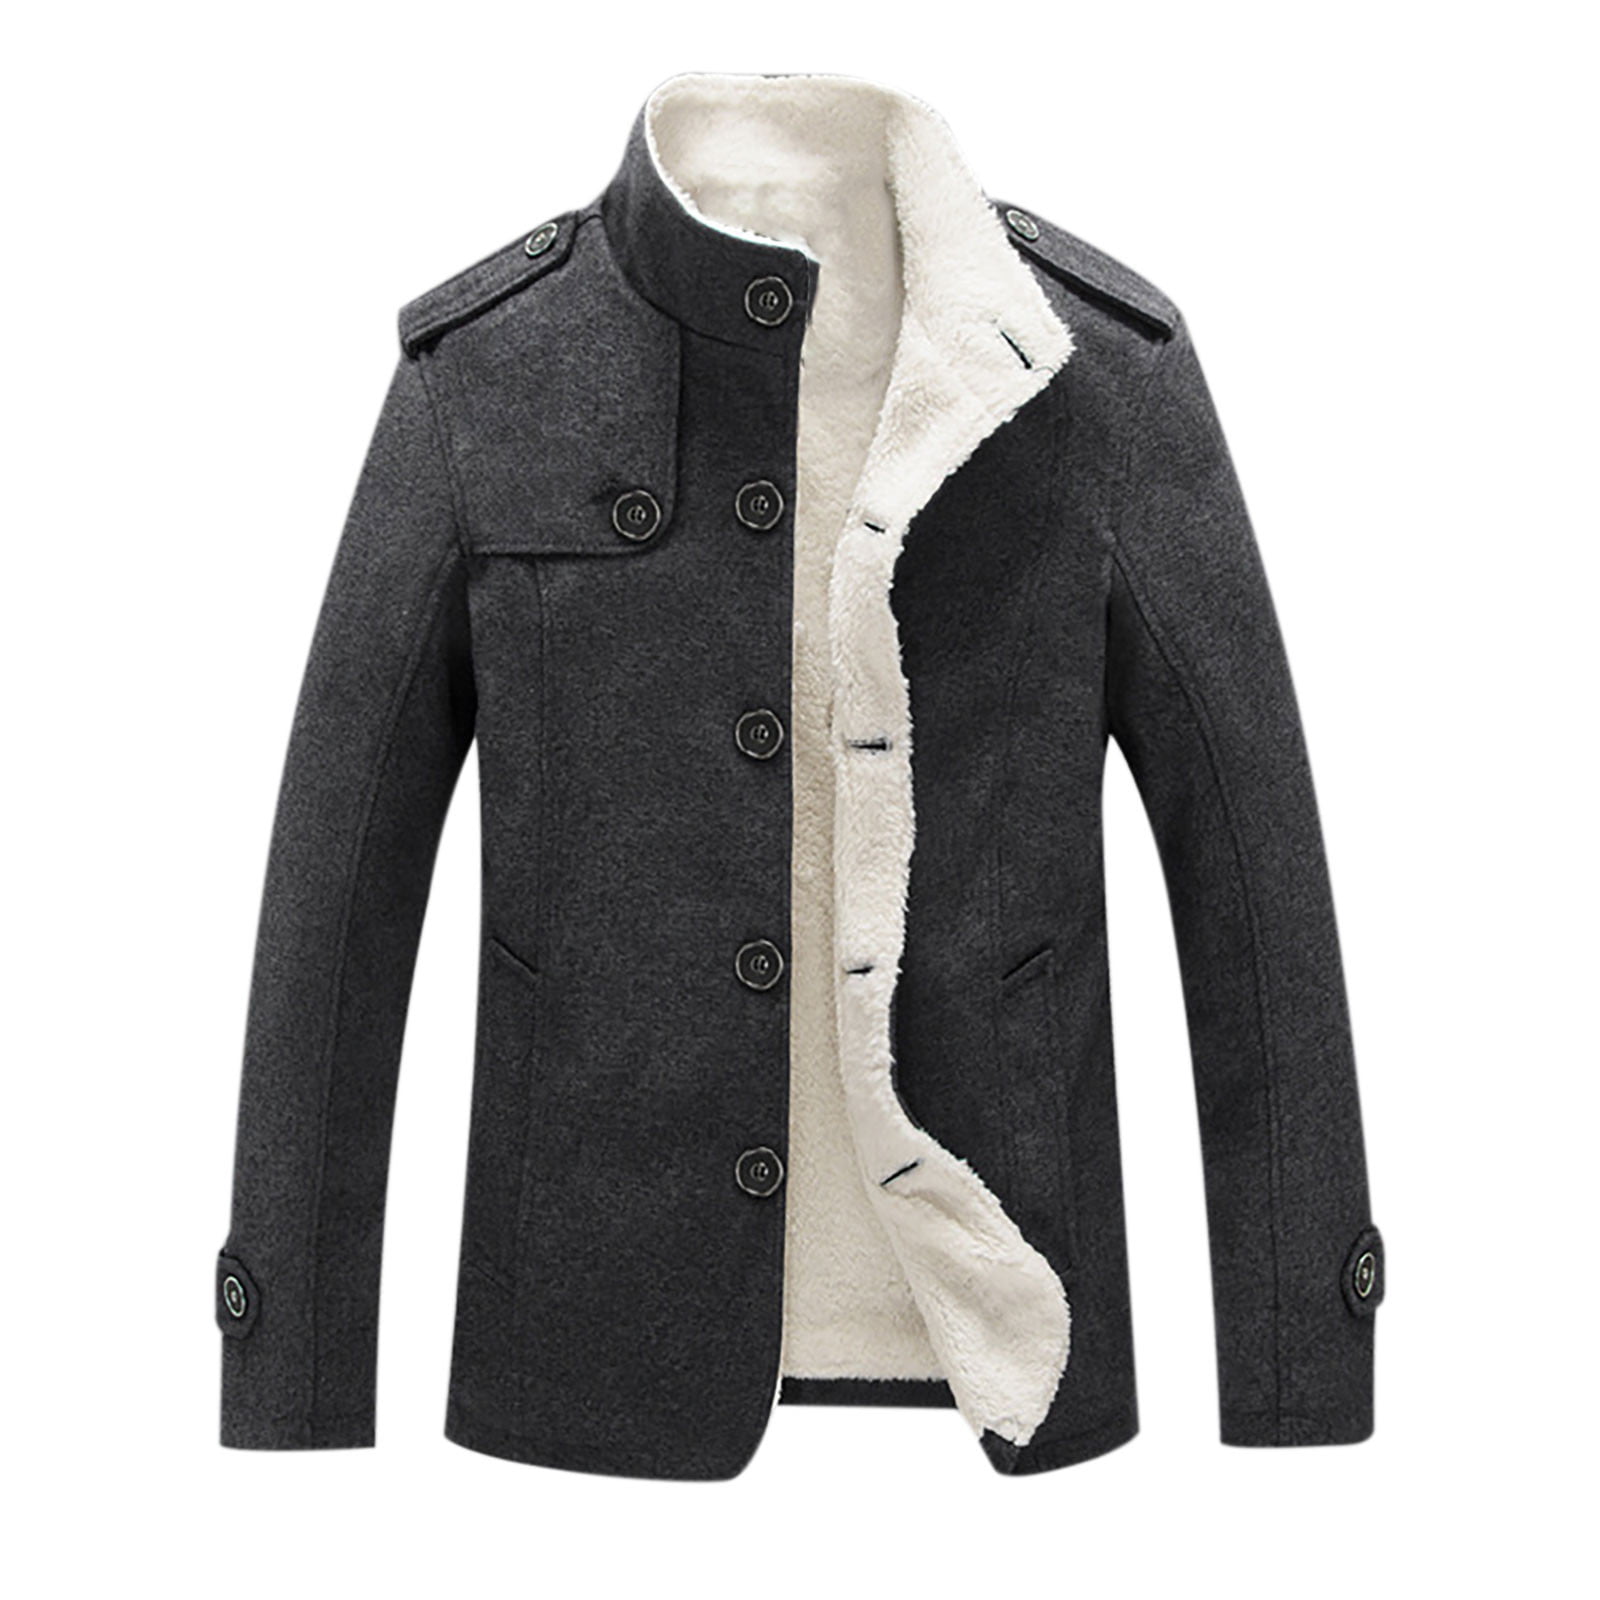 Single Breasted Men Pullovers Warm Winter Casual Coat Jacket Outwear Sweater New